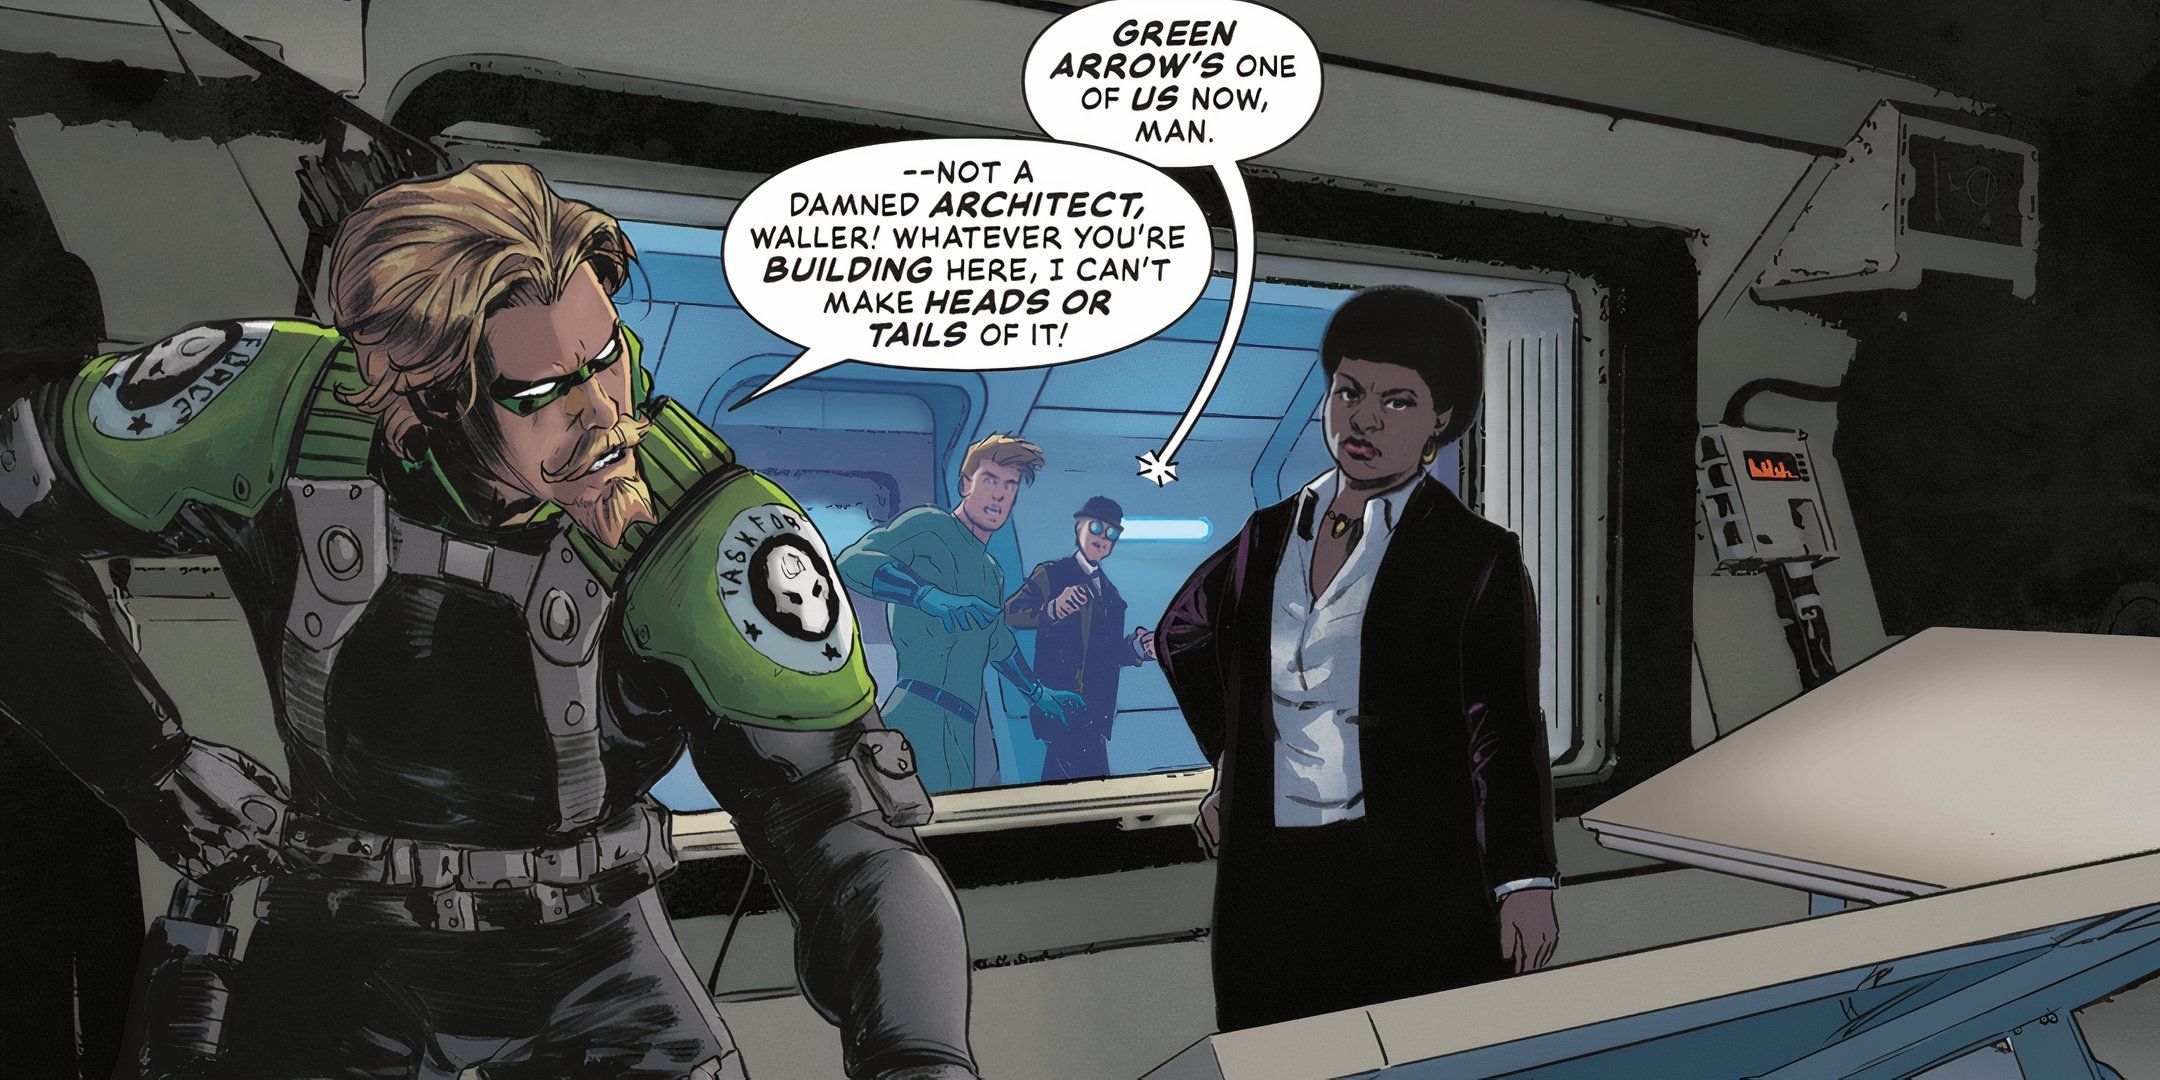 Green Arrow Mengamati Rencana Pembangunan Waller DC